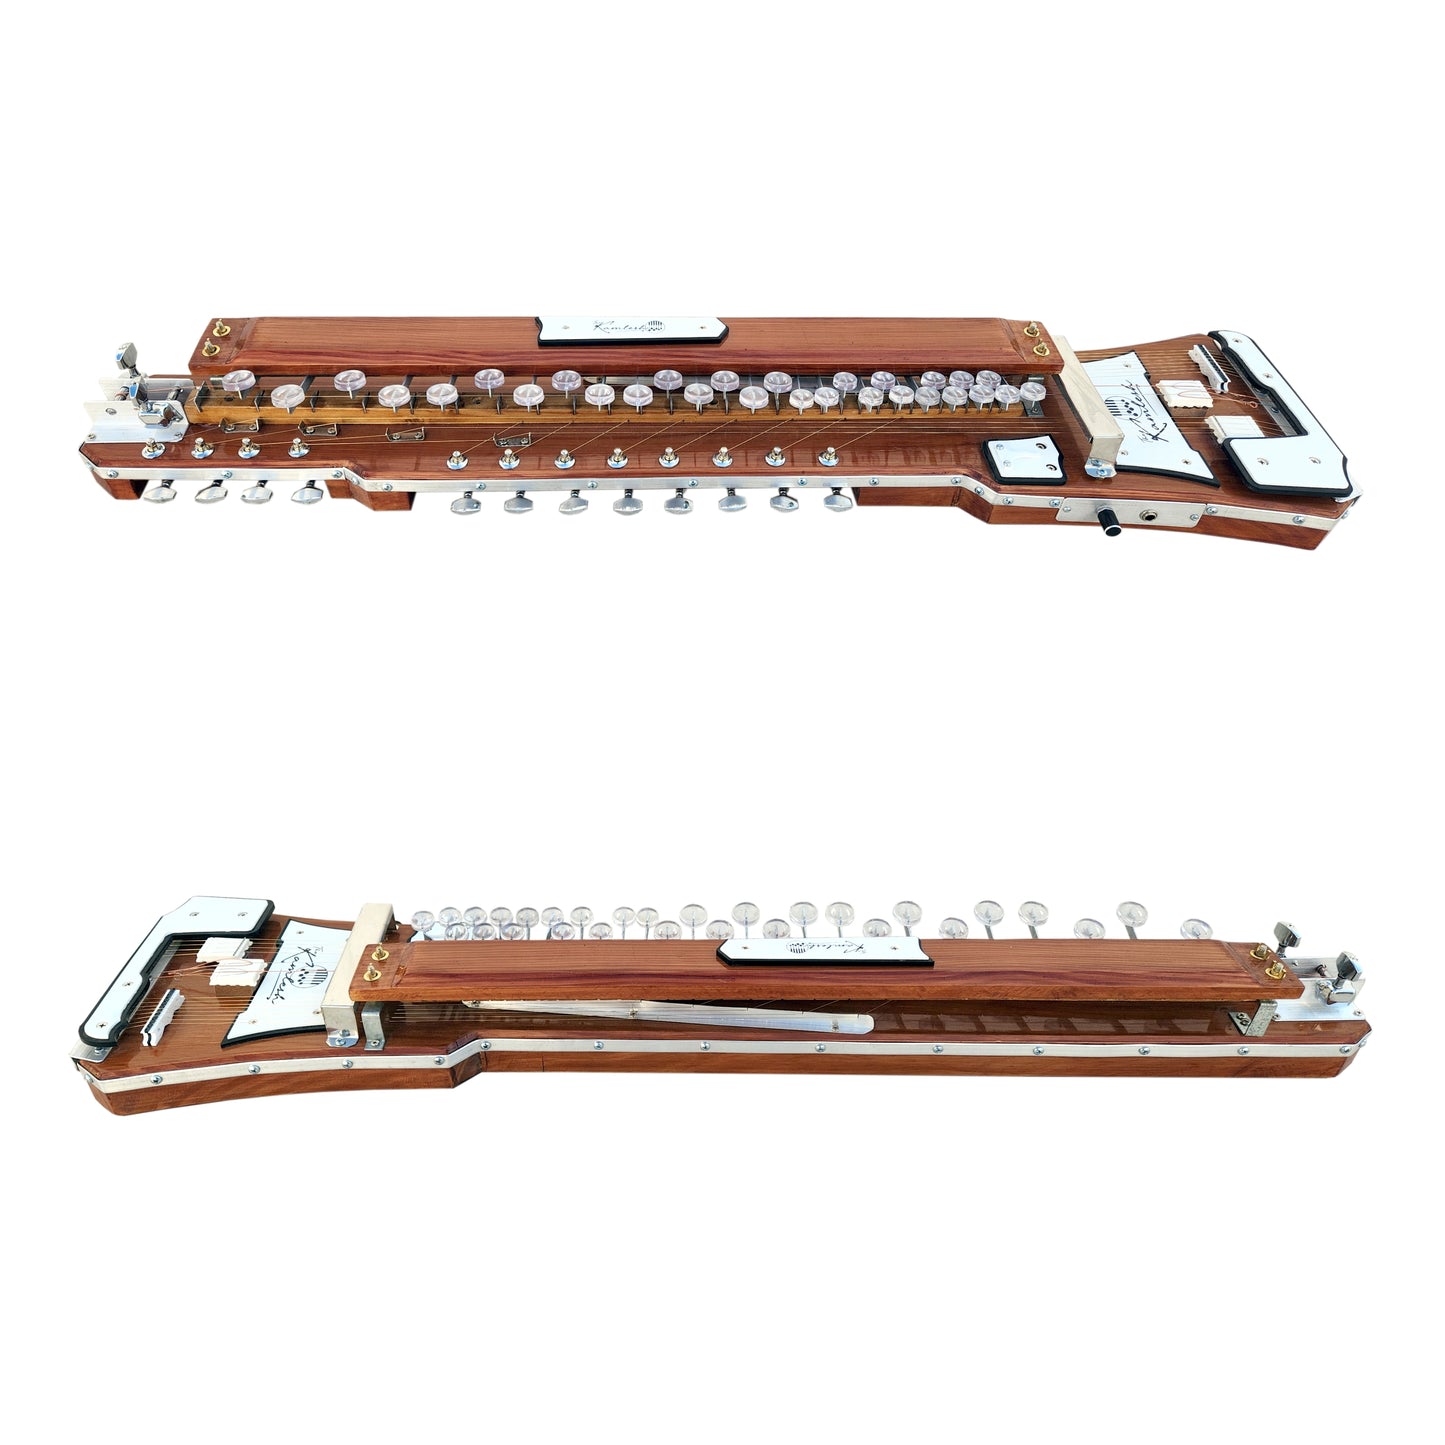 The Kamlesh® Bulbul Tarang (Indian Banjo) with Padded Carry Bag & Accessories - 29 Keys, 14 Strings, Natural Brown